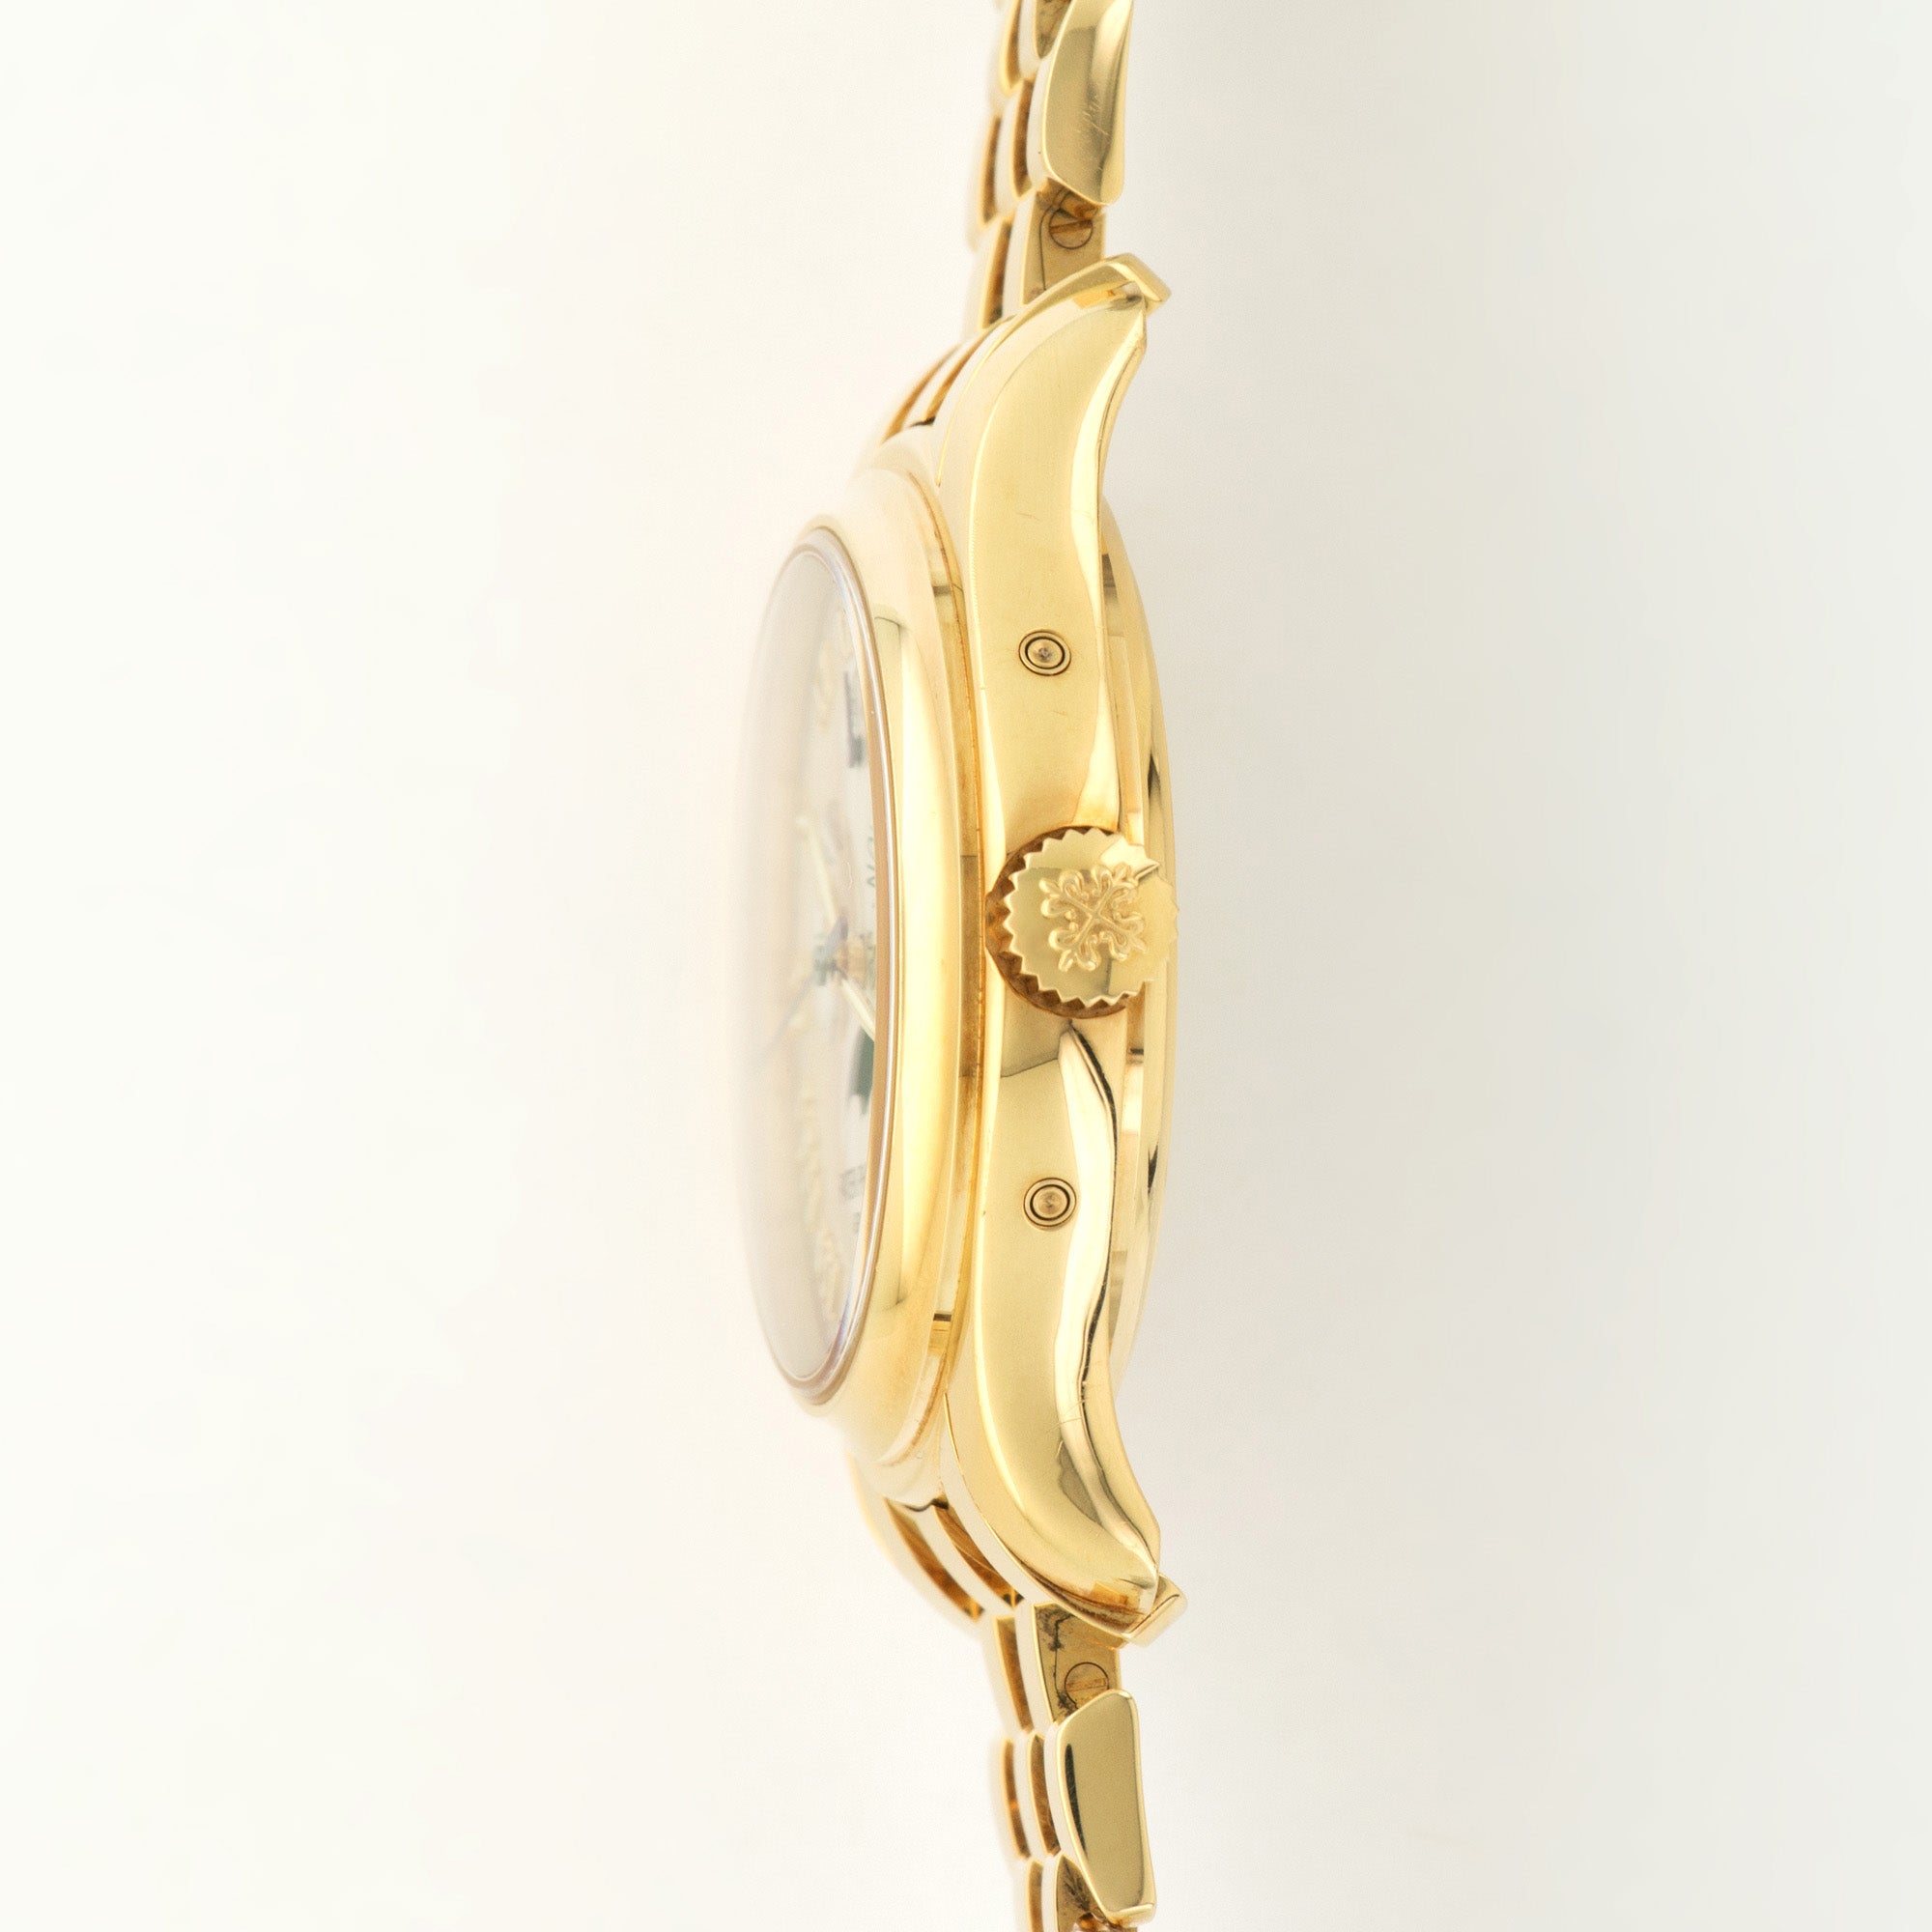 Patek Philippe - Patek Philippe Yellow Gold Annual Calendar Watch Ref. 5036J - The Keystone Watches